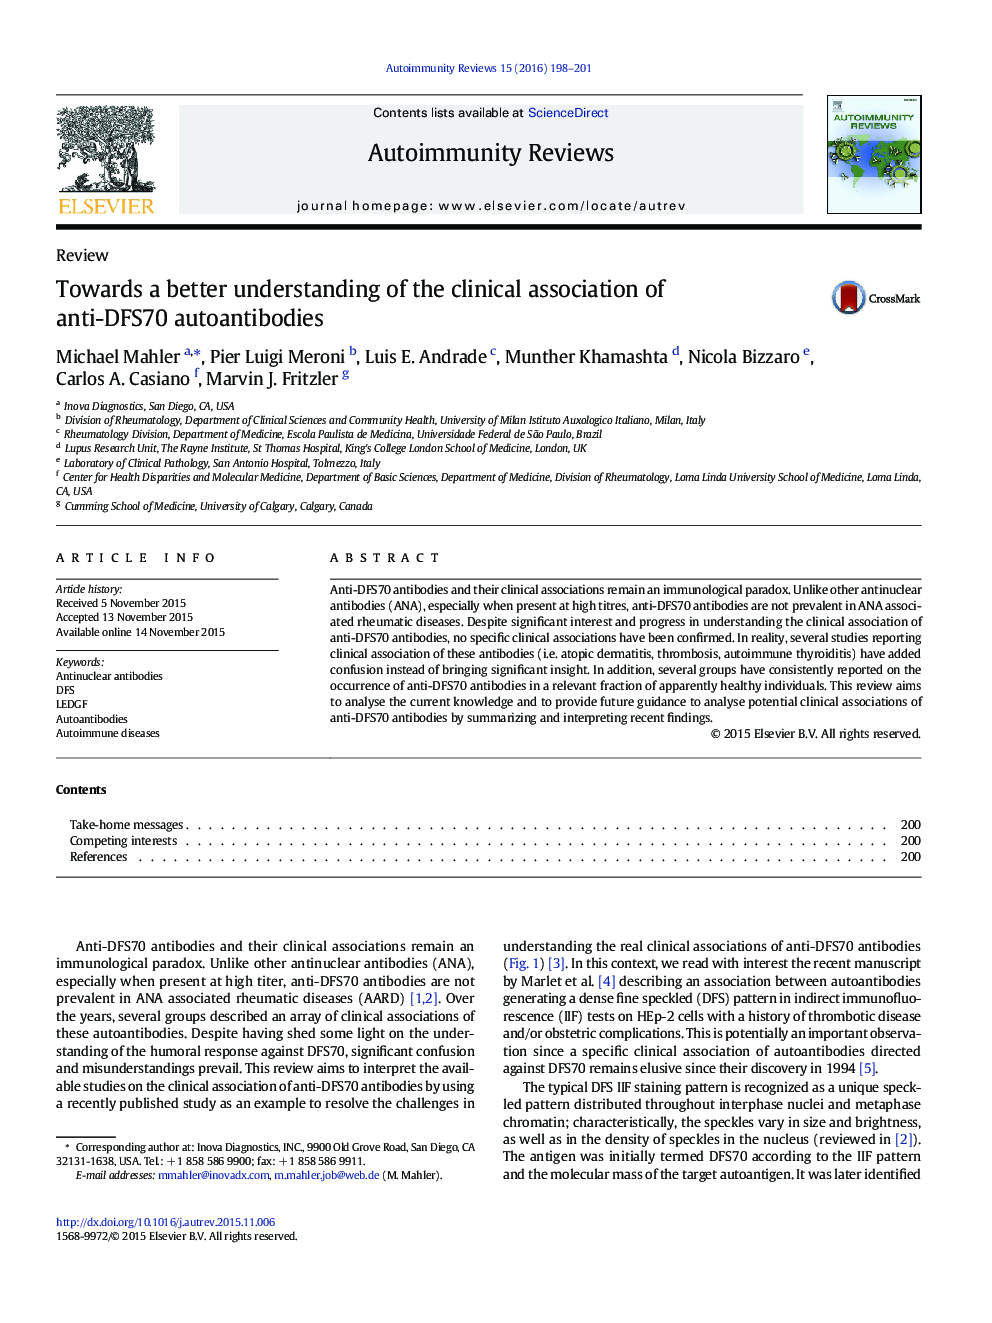 Towards a better understanding of the clinical association of anti-DFS70 autoantibodies